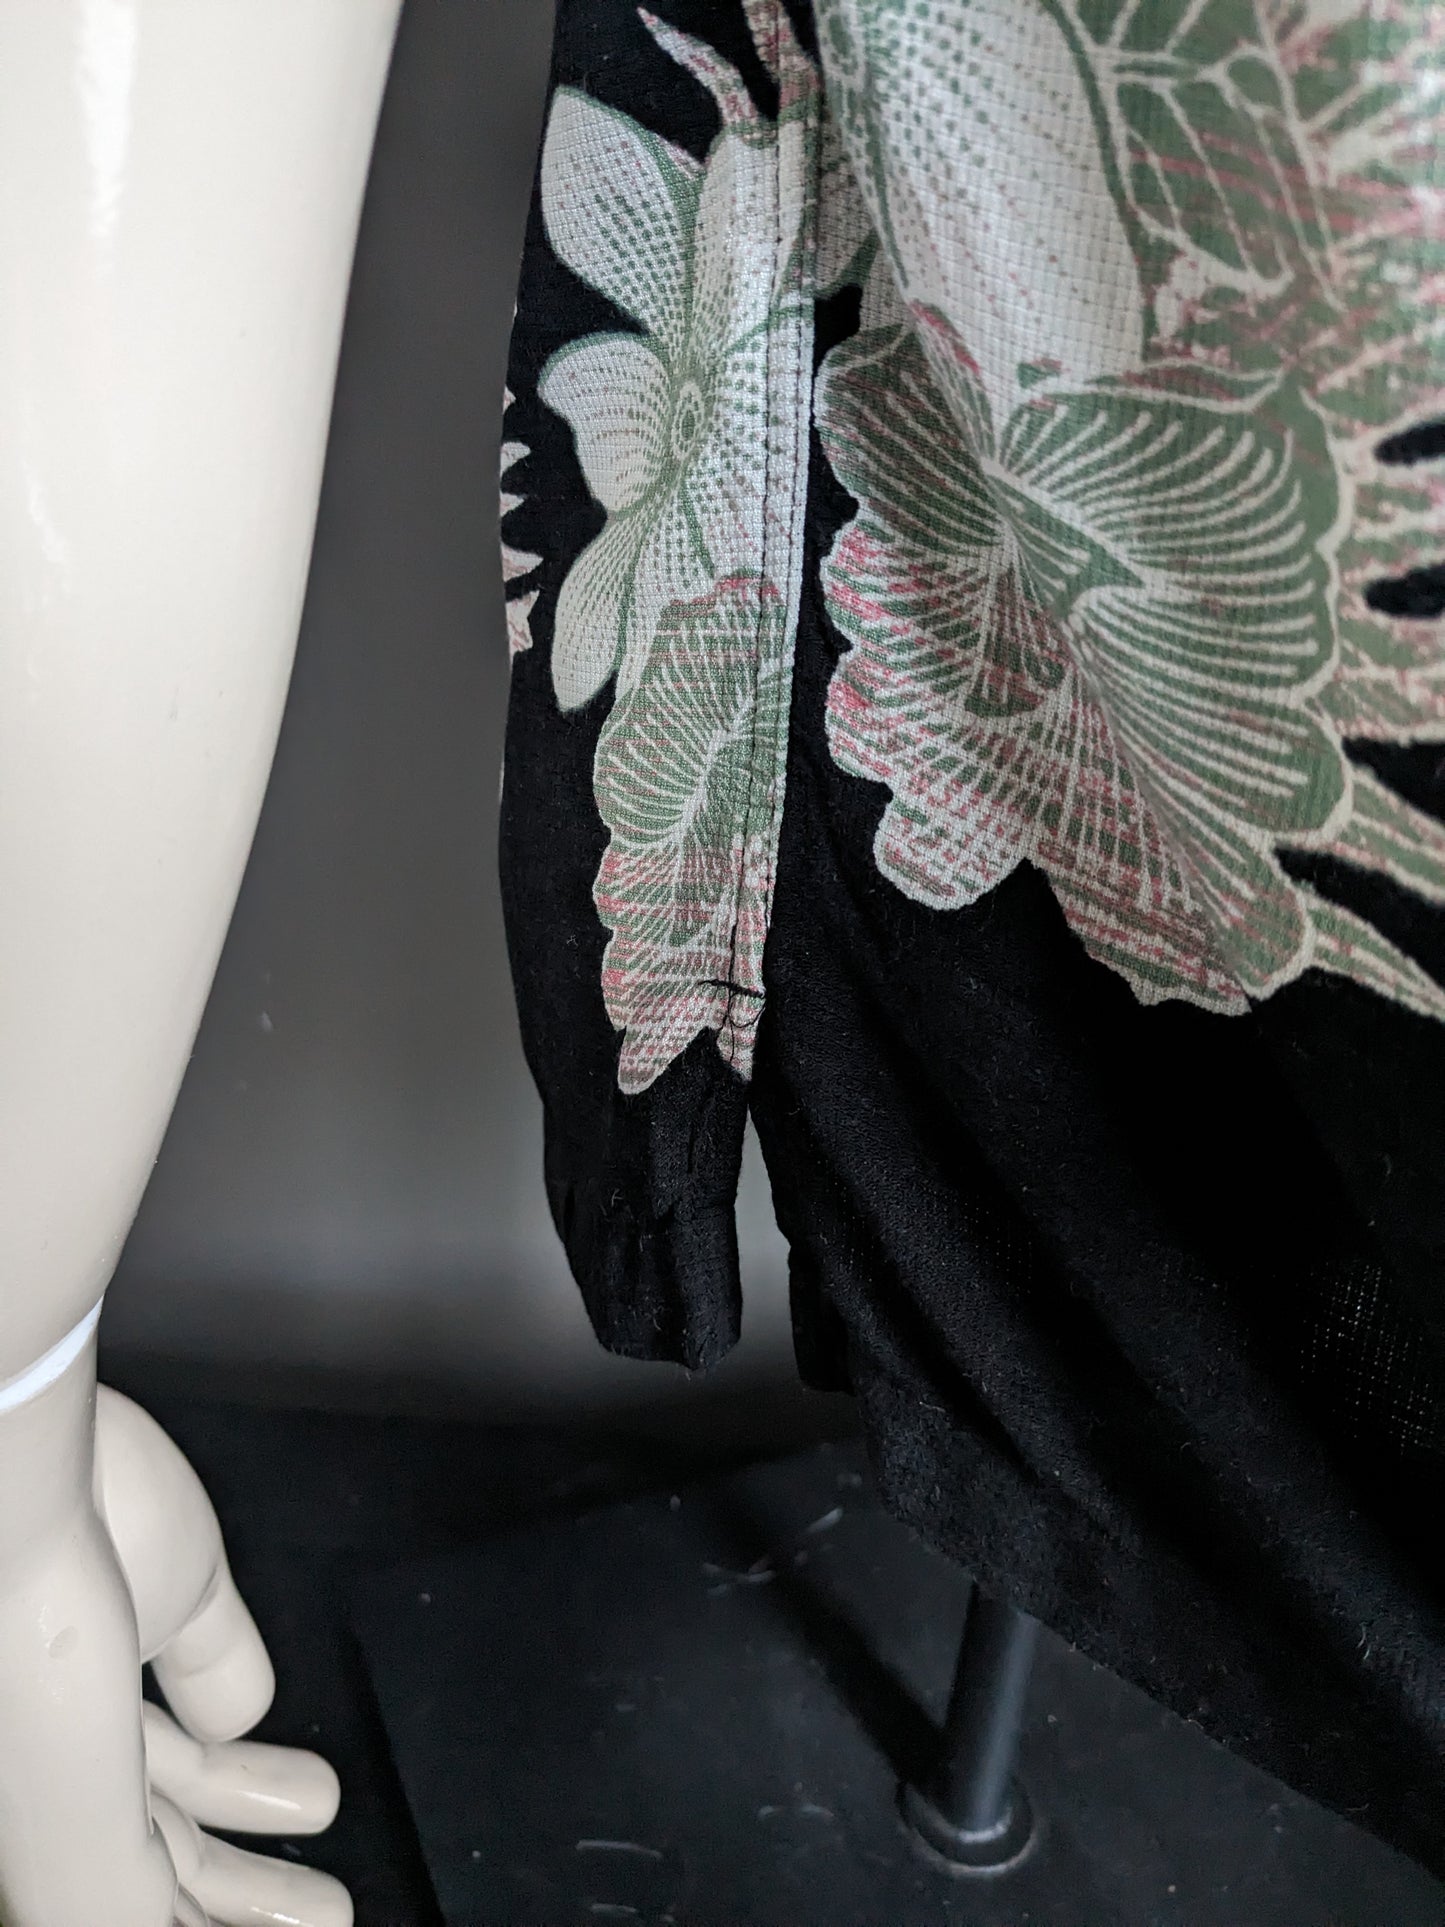 Camisa de seda de seda original caribeña manga corta. Black Green Red Beige Floral estampado. Tamaño M. 55% de seda.